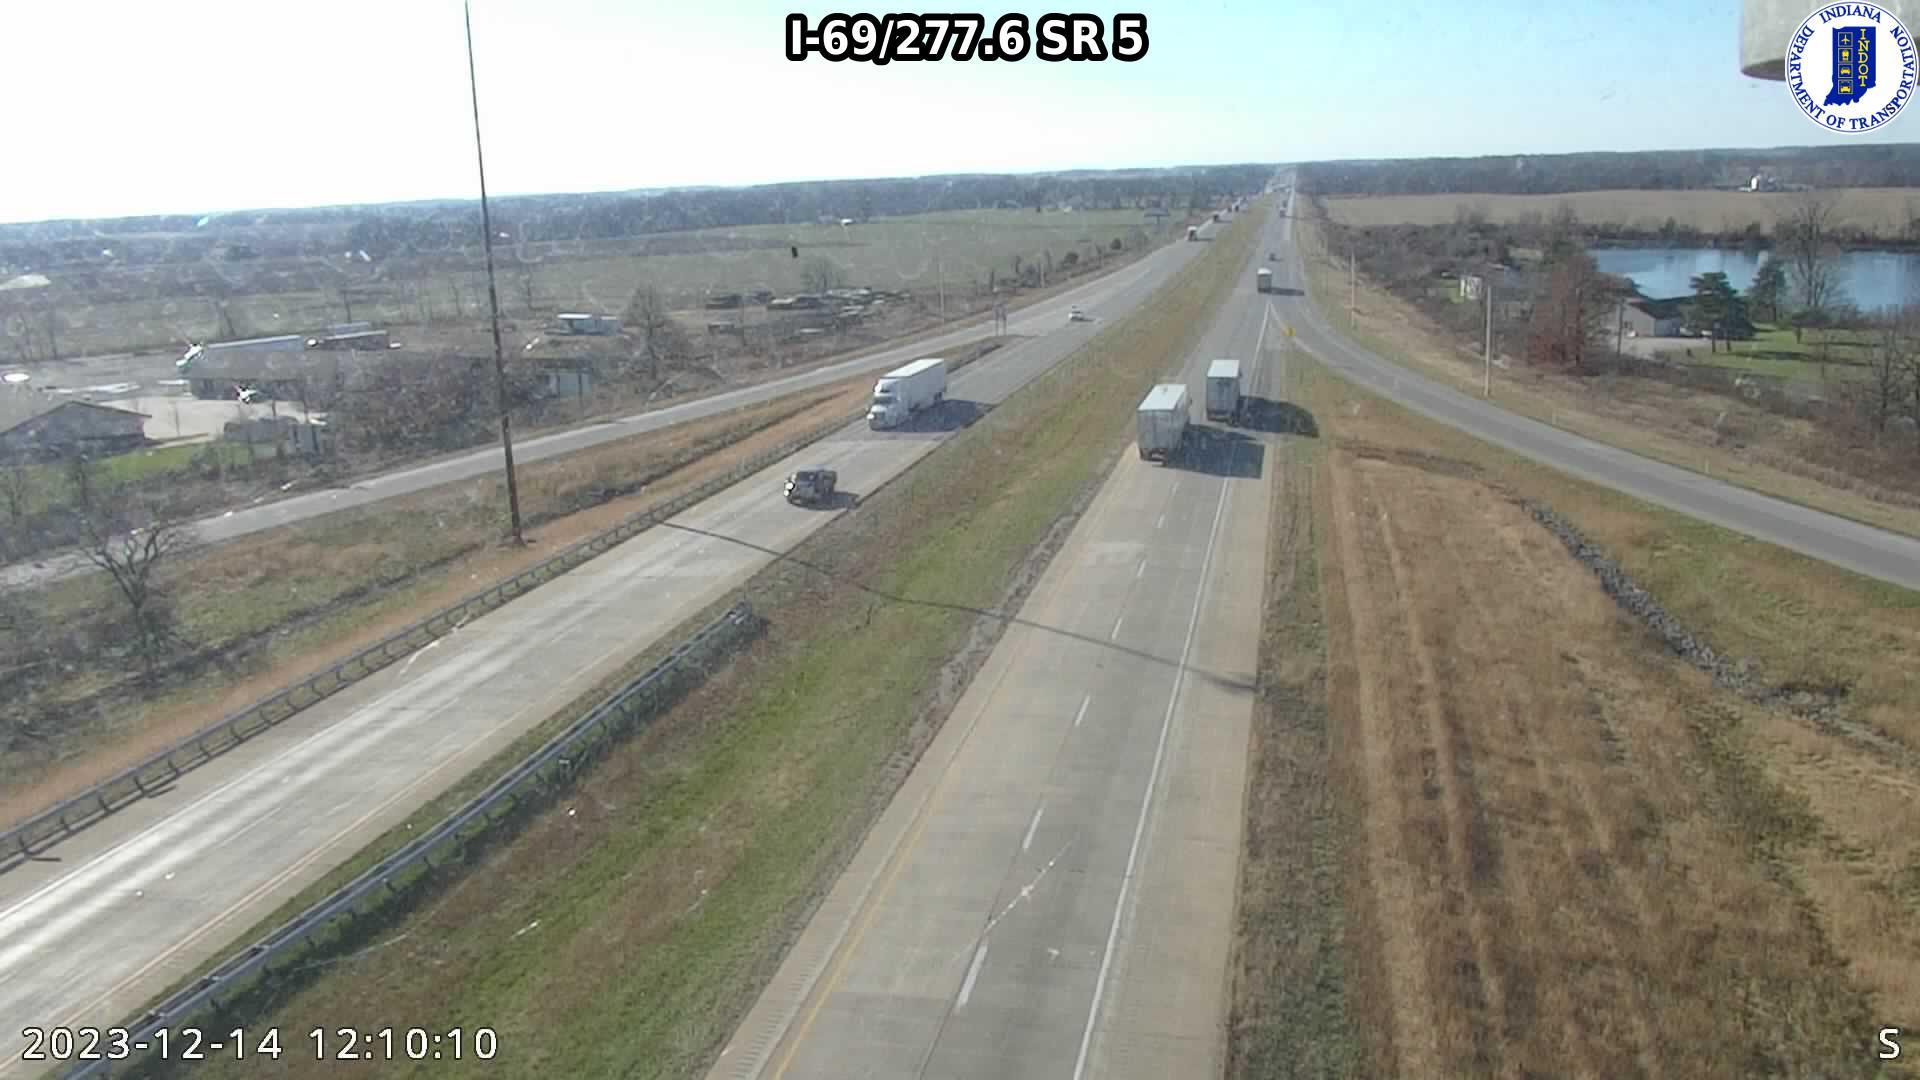 Warren: I-69: I-69/277.6 SR Traffic Camera